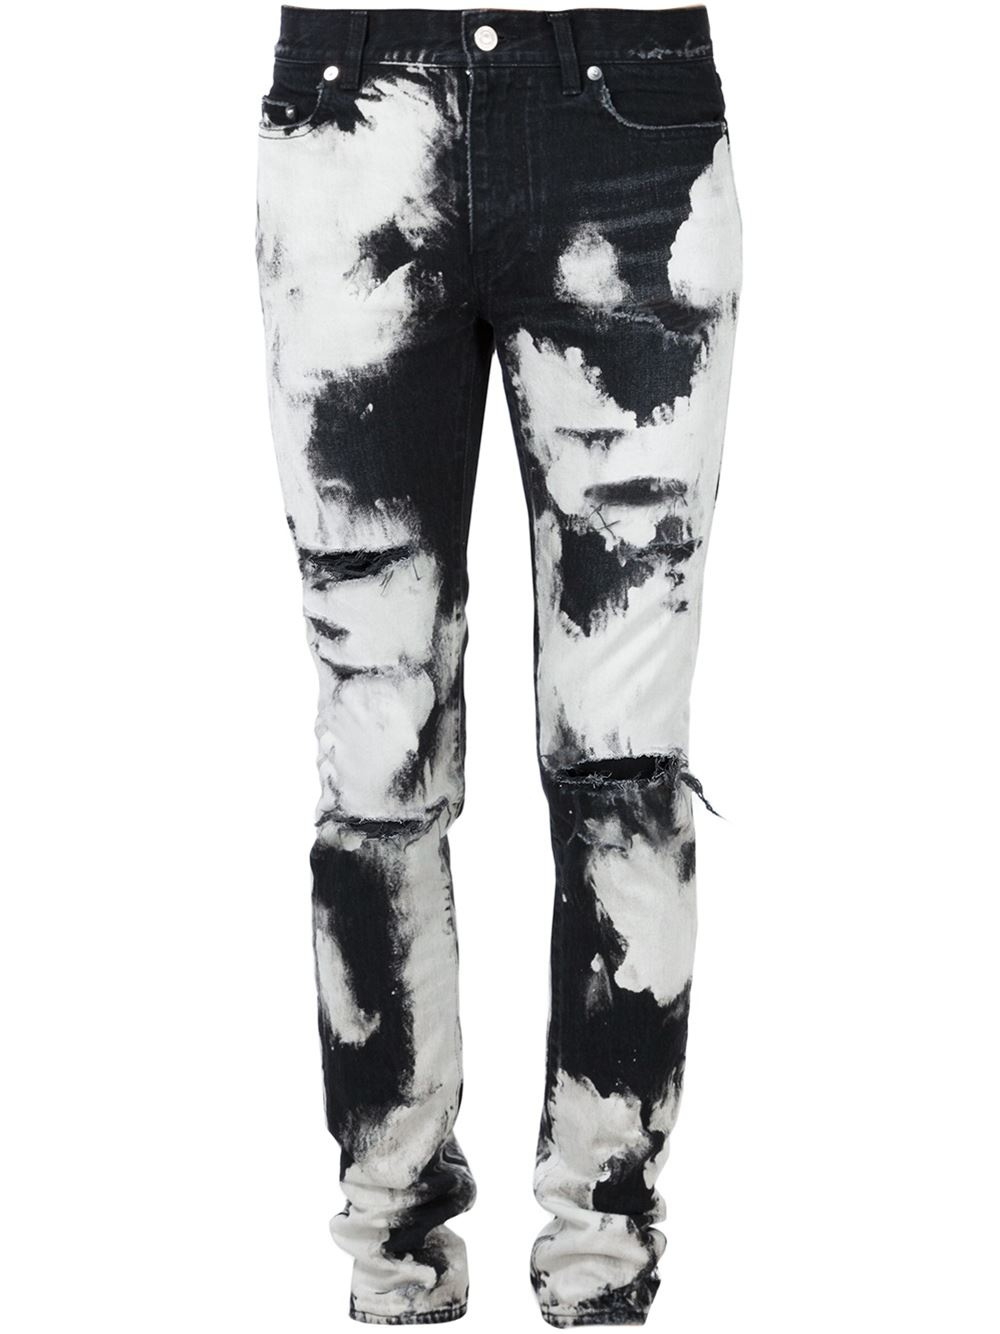 Lyst - Saint Laurent Tie-dye Skinny Jeans in White for Men